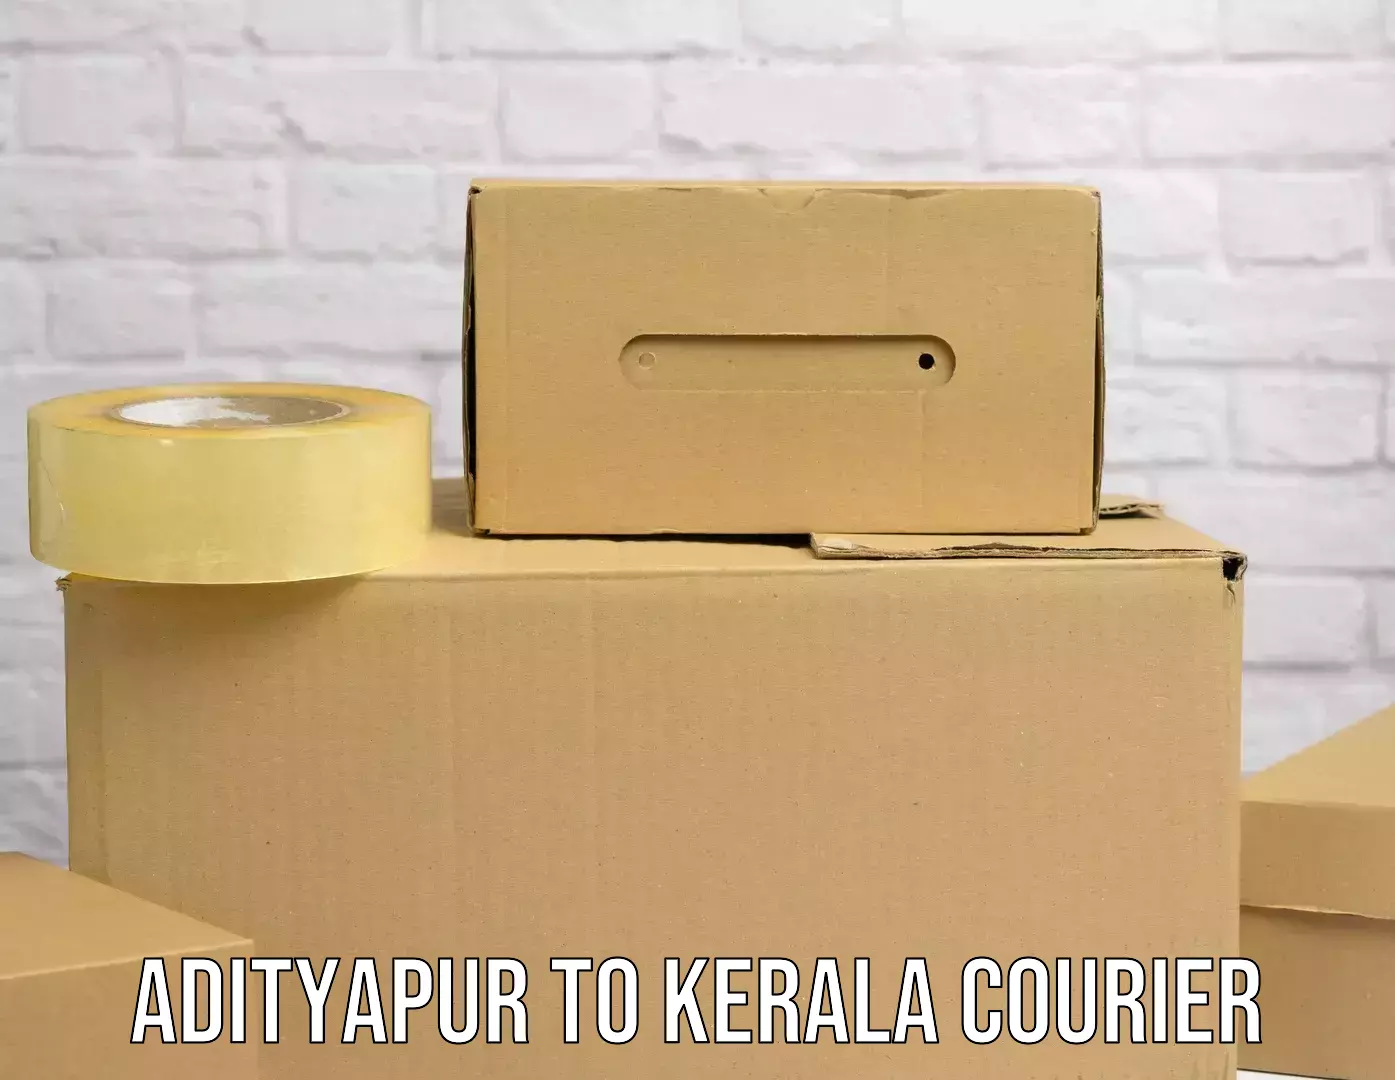 Courier service comparison Adityapur to Kothanalloor